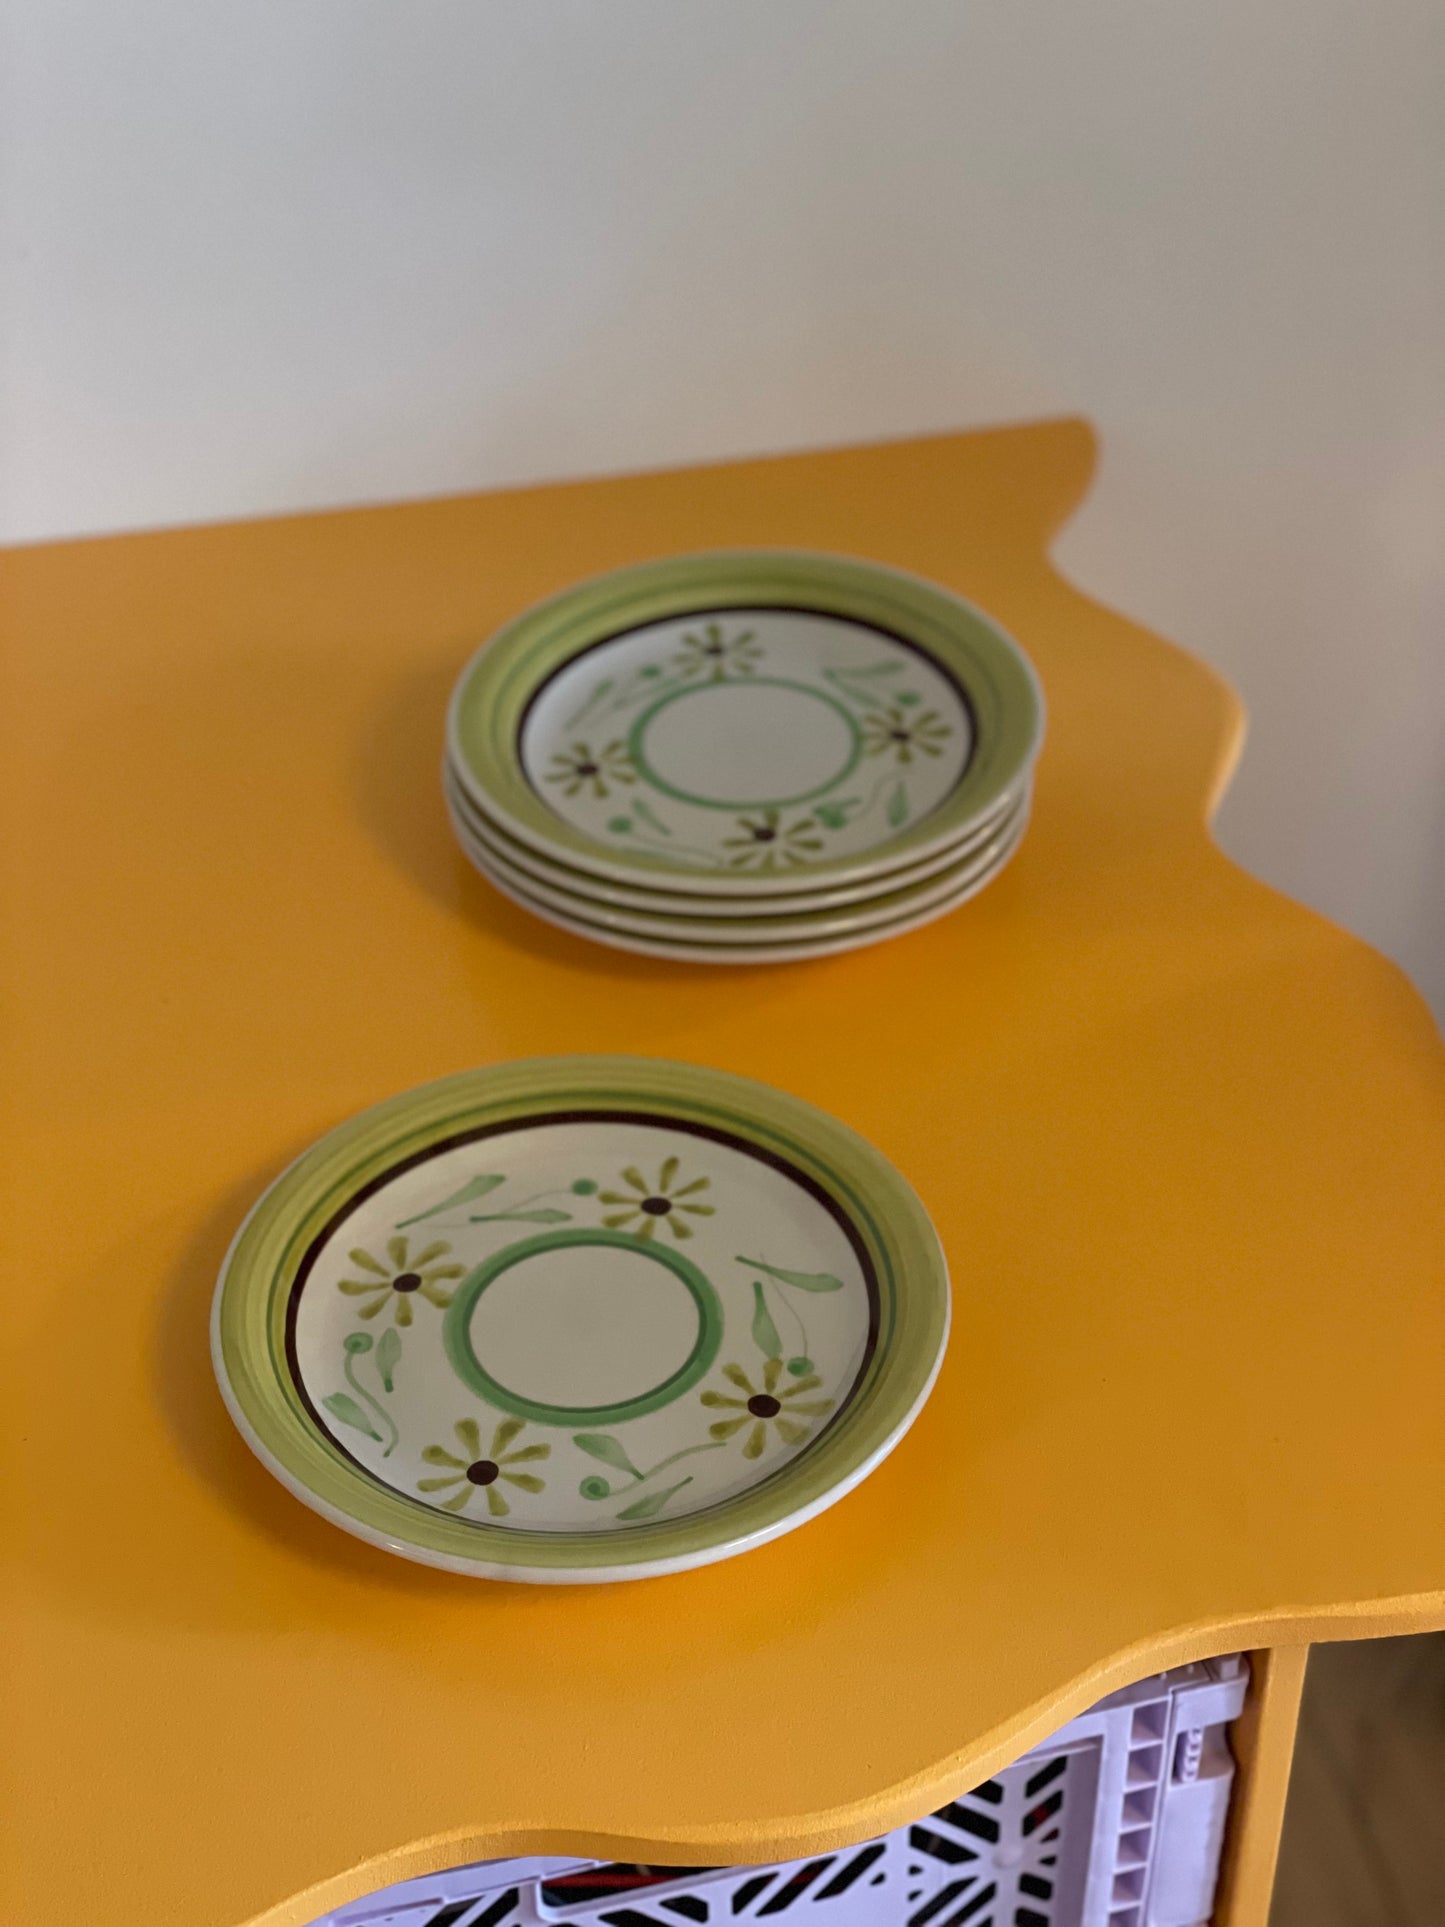 Italian breakfast plates with flowers